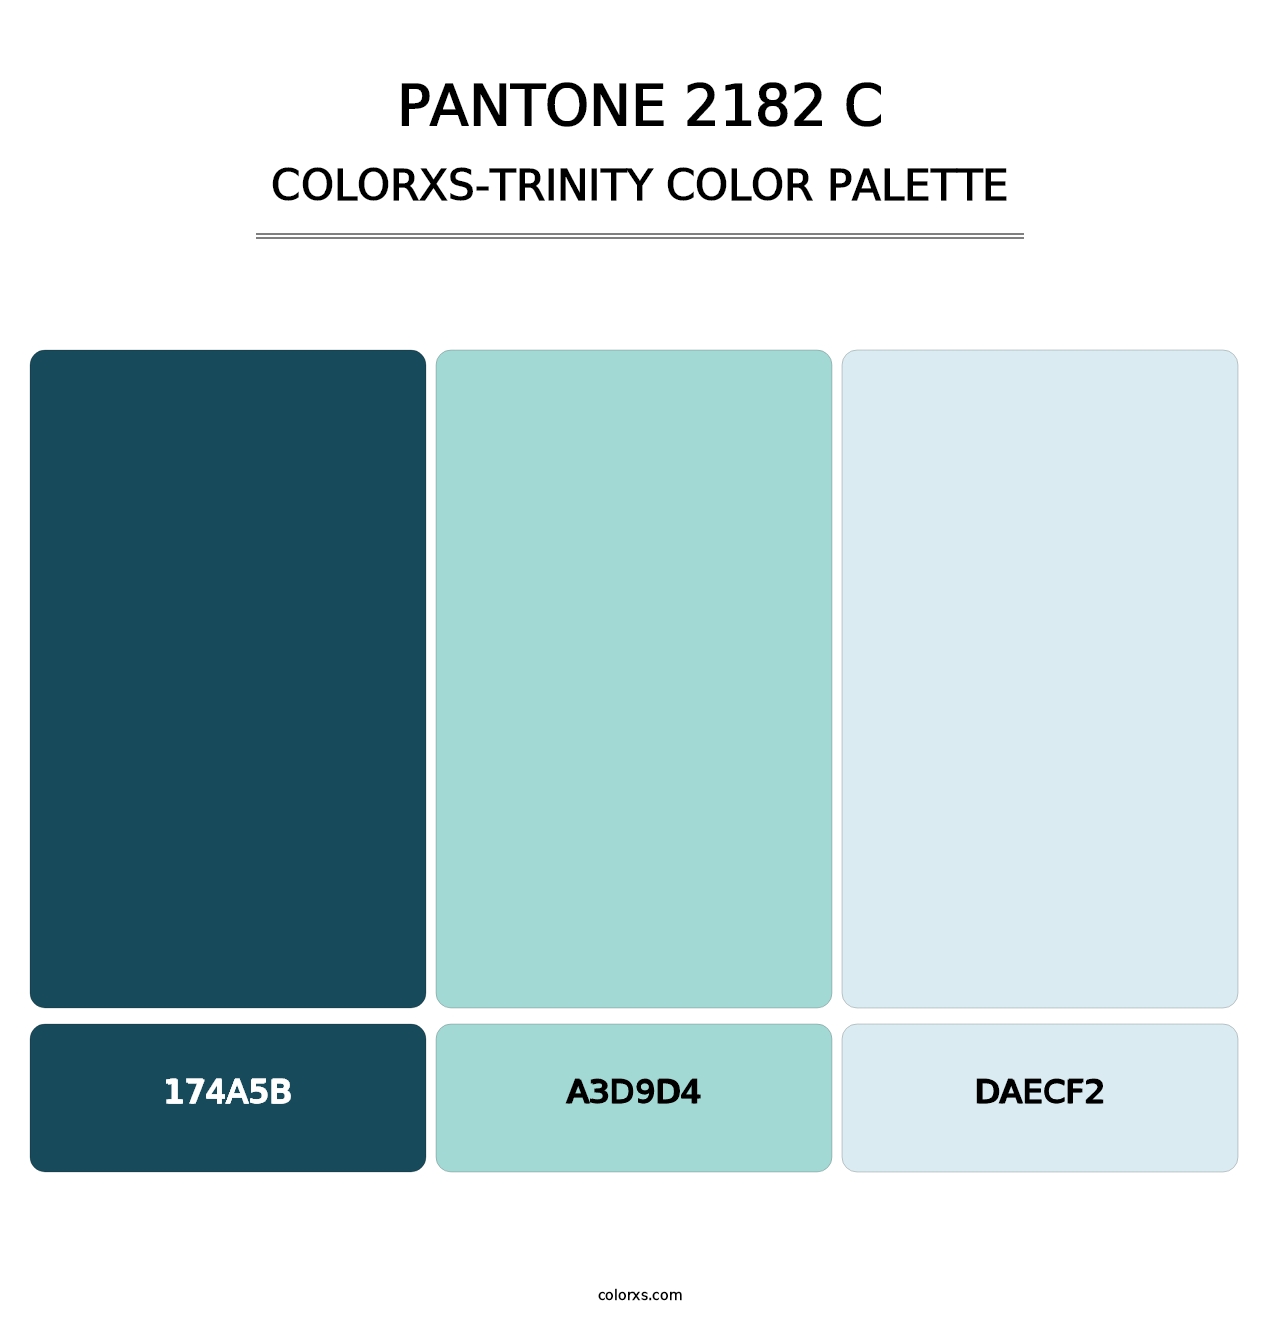 PANTONE 2182 C - Colorxs Trinity Palette